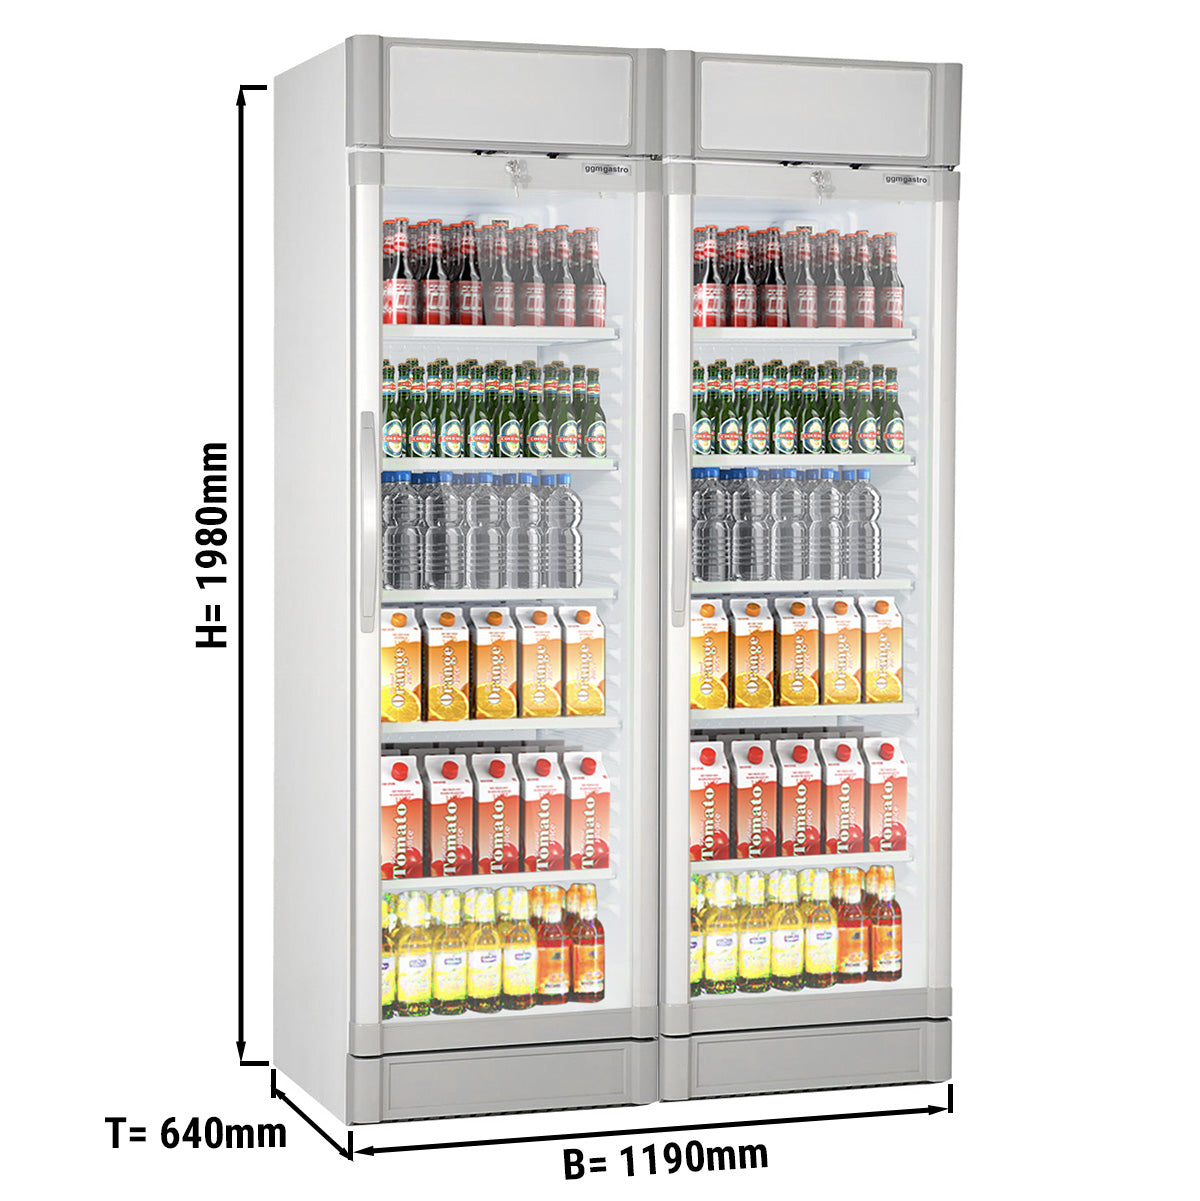 (2 броя) Хладилник за напитки - 690 литра (общо) - бял/сив